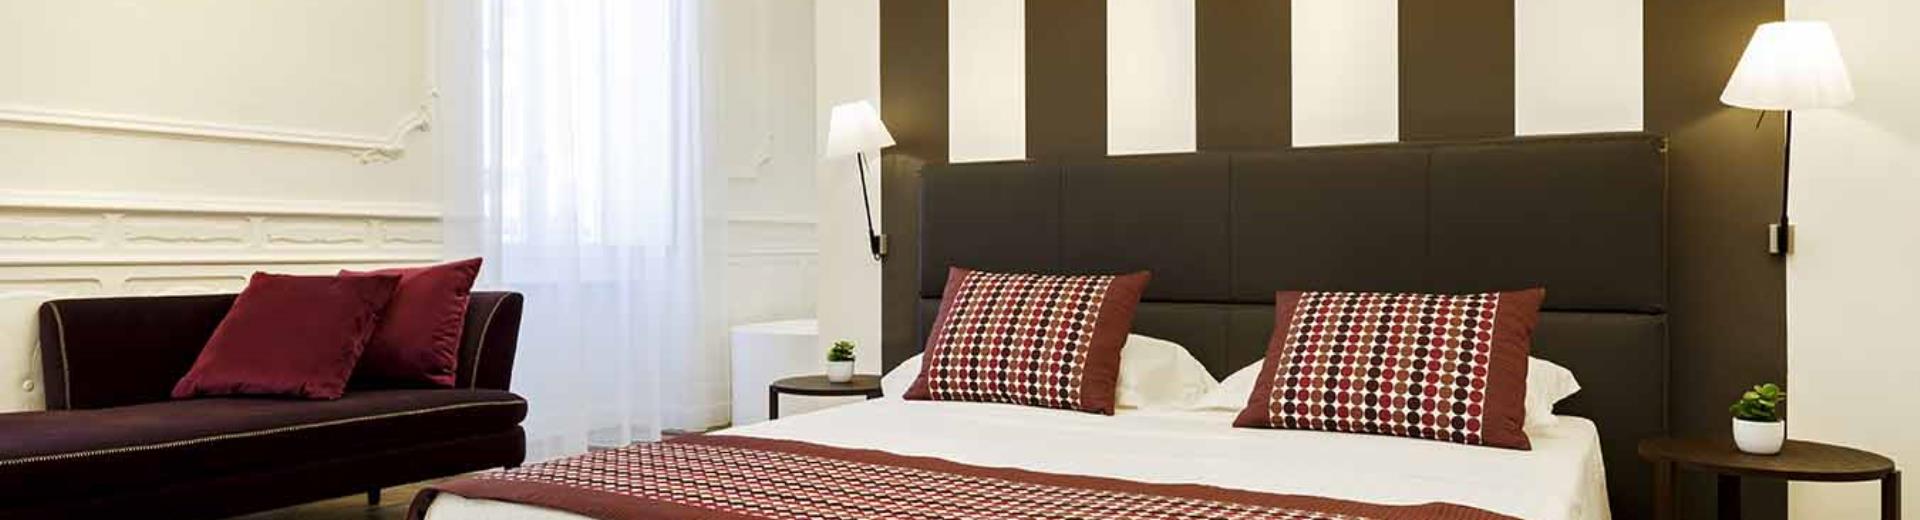 Suite Hotel Royal Superga Cuneo 3 stelle